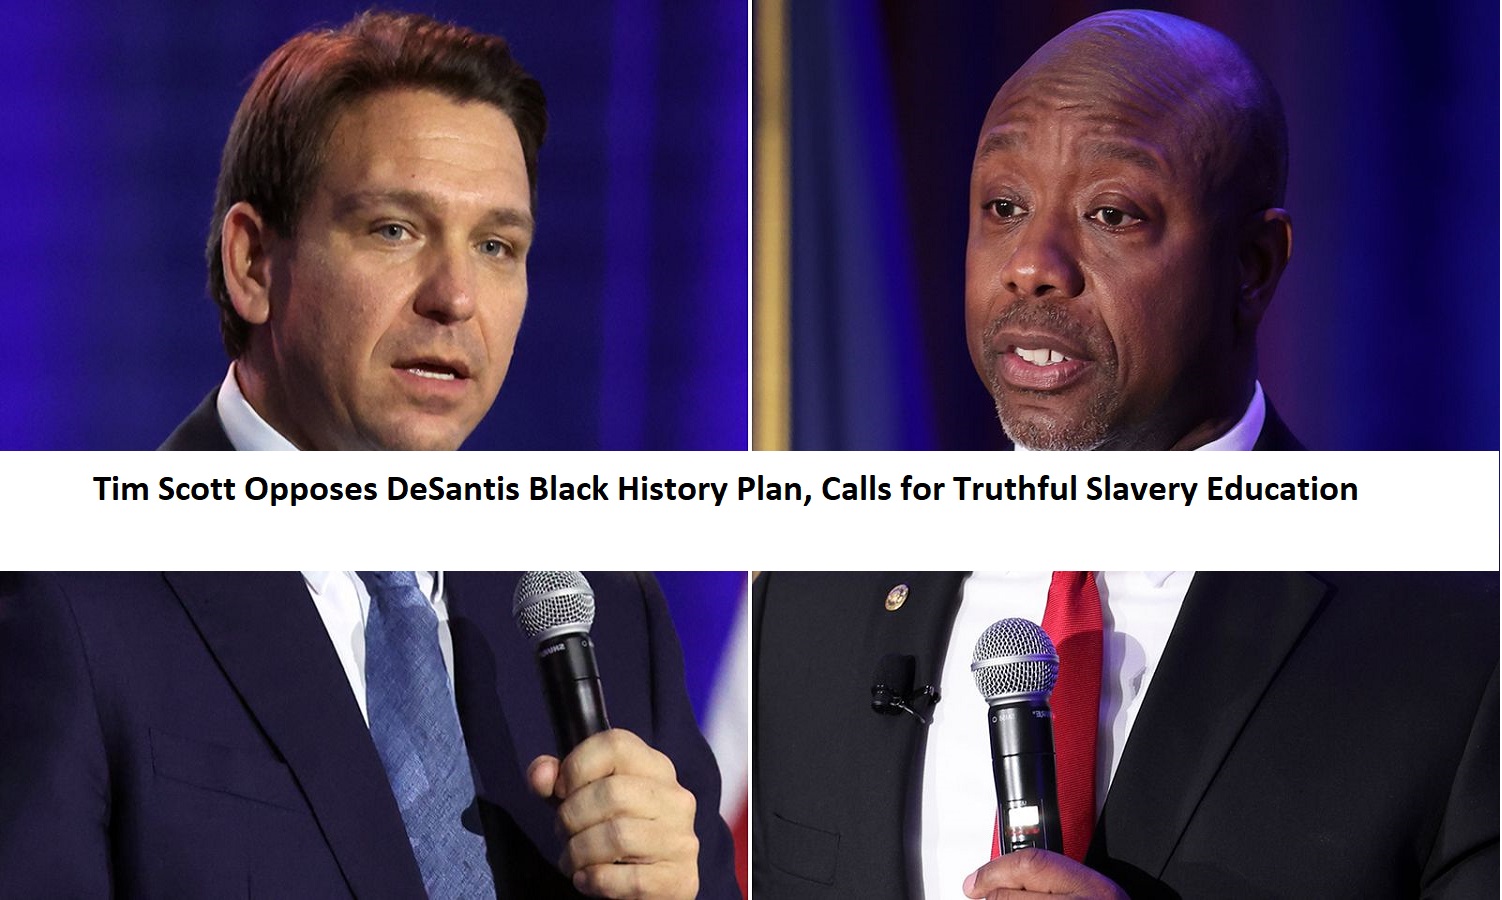 Tim Scott Opposes DeSantis Black History Plan, Calls for Truthful Slavery Education